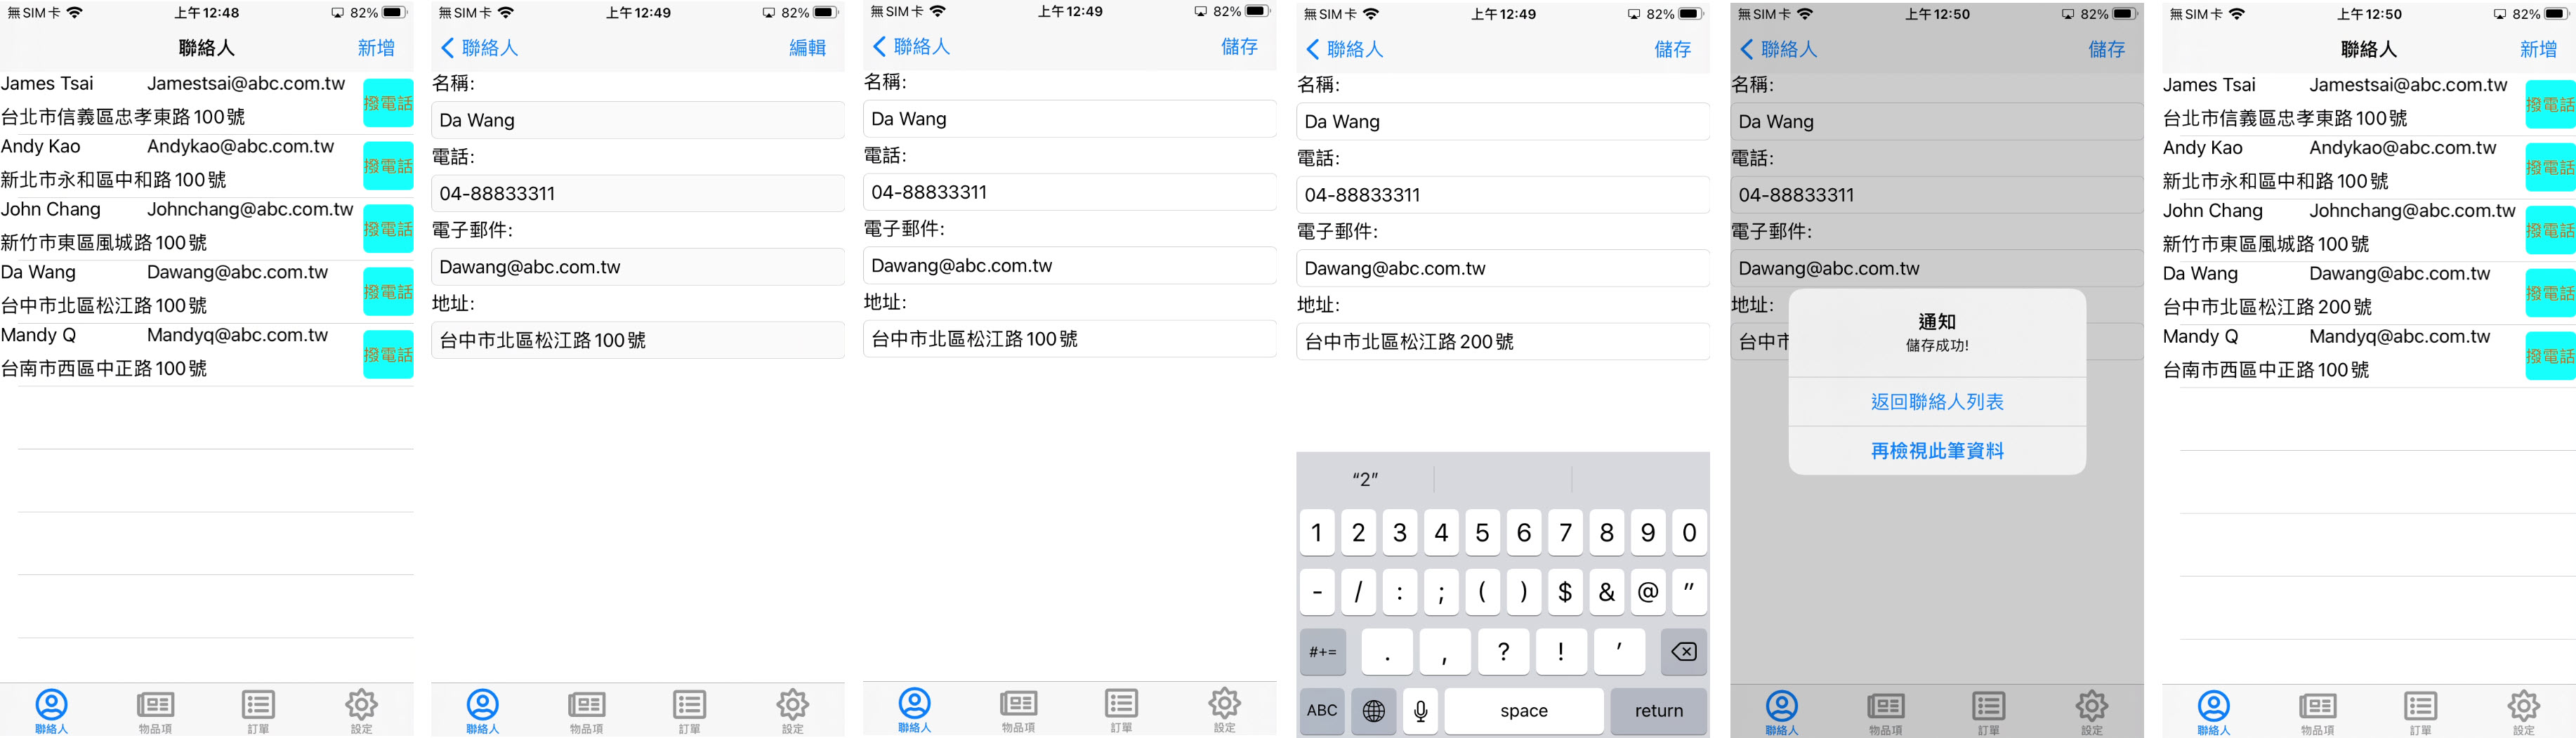 PersonDetailPage 修改聯絡人資料-iOS